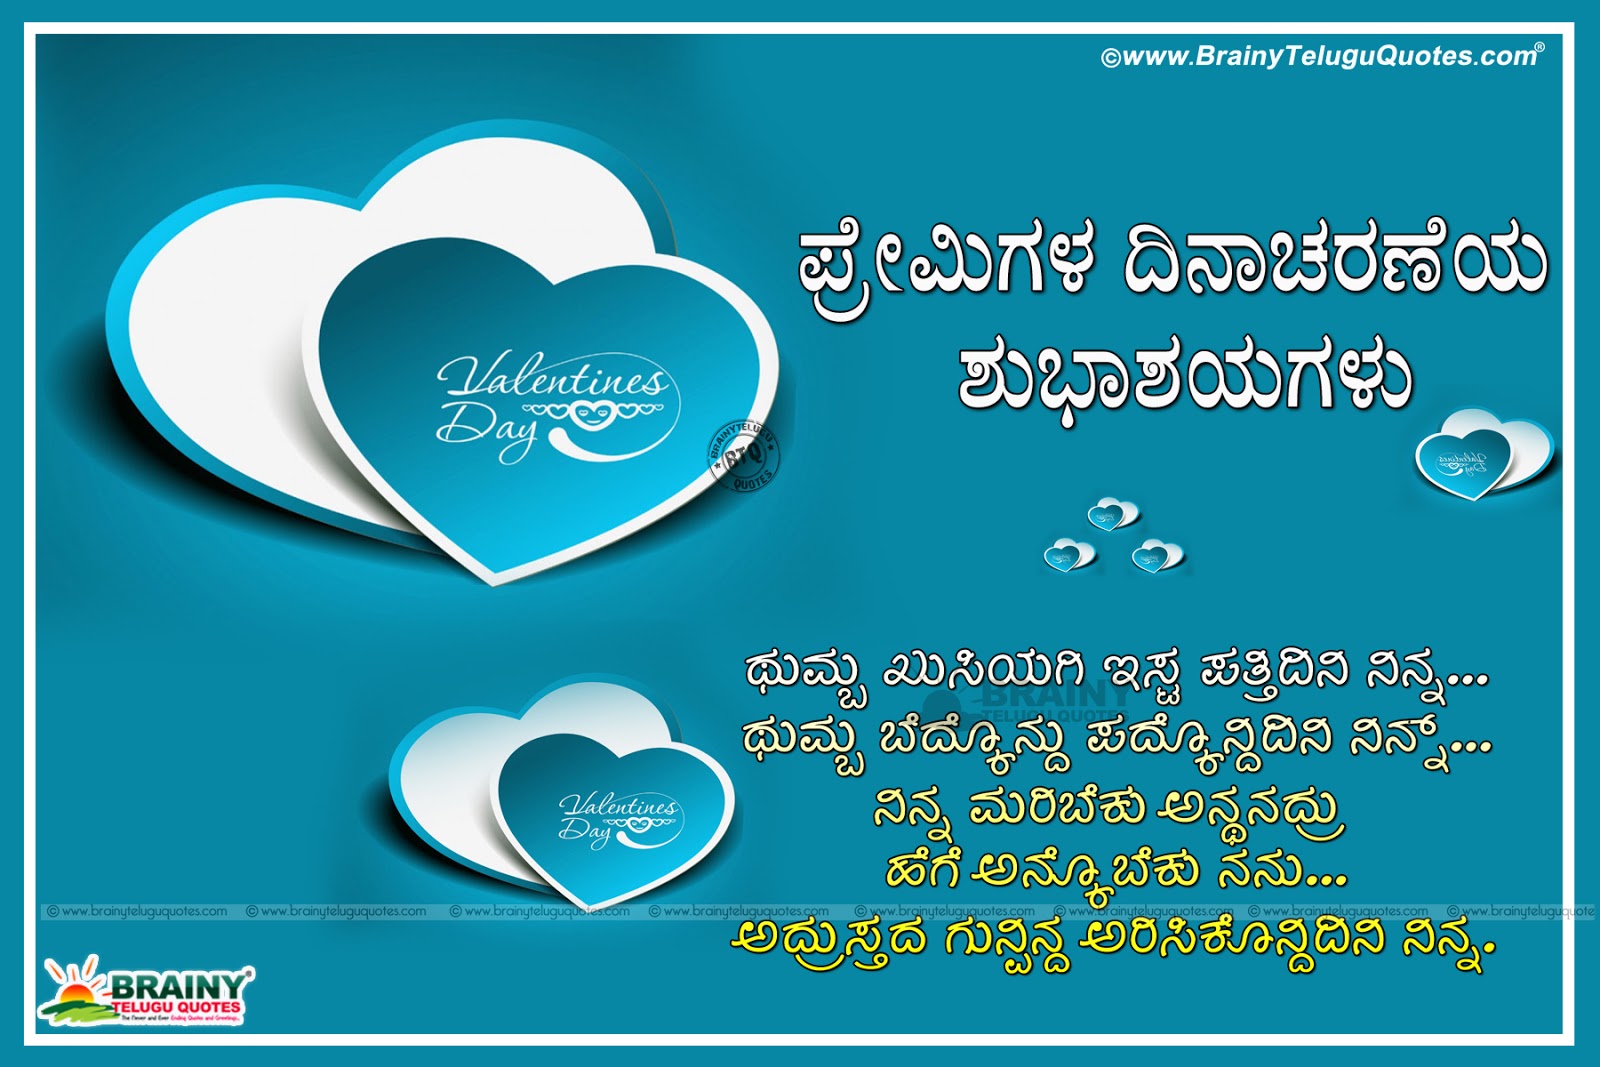 Happy Valentine's Day Wishes Quotes in Kannada-Kannada Love